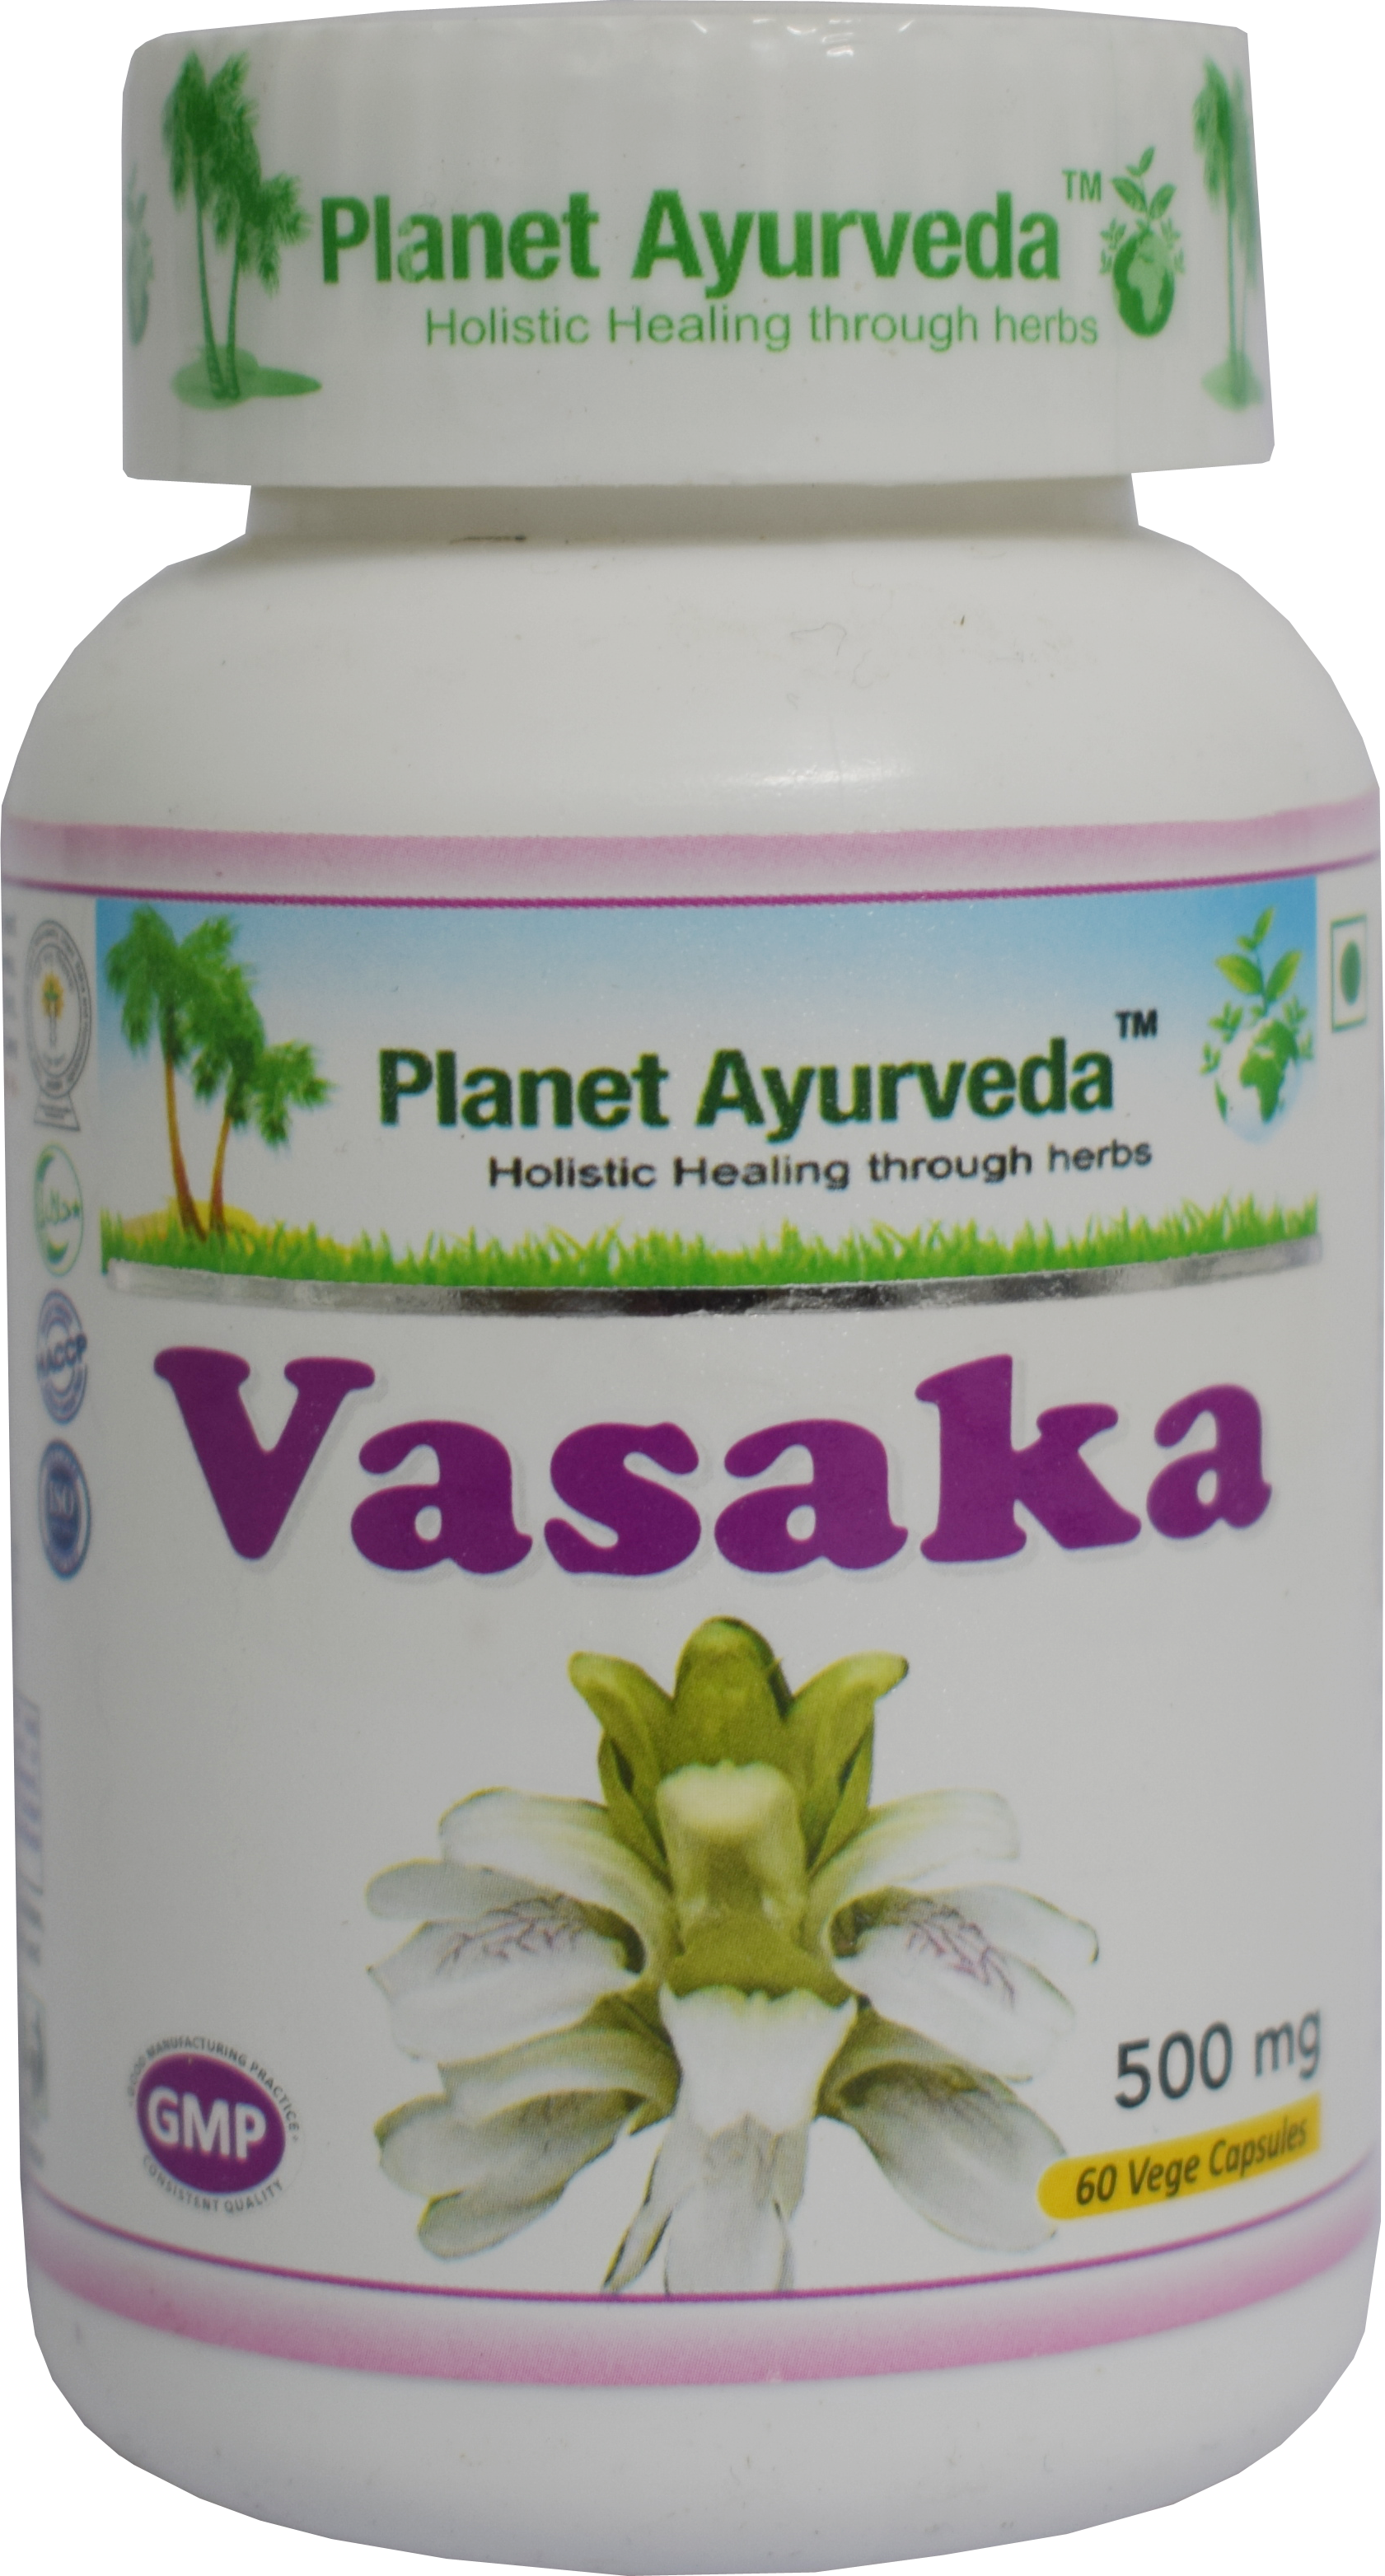 Buy Planet Ayurveda Vasaka Capsules at Best Price Online